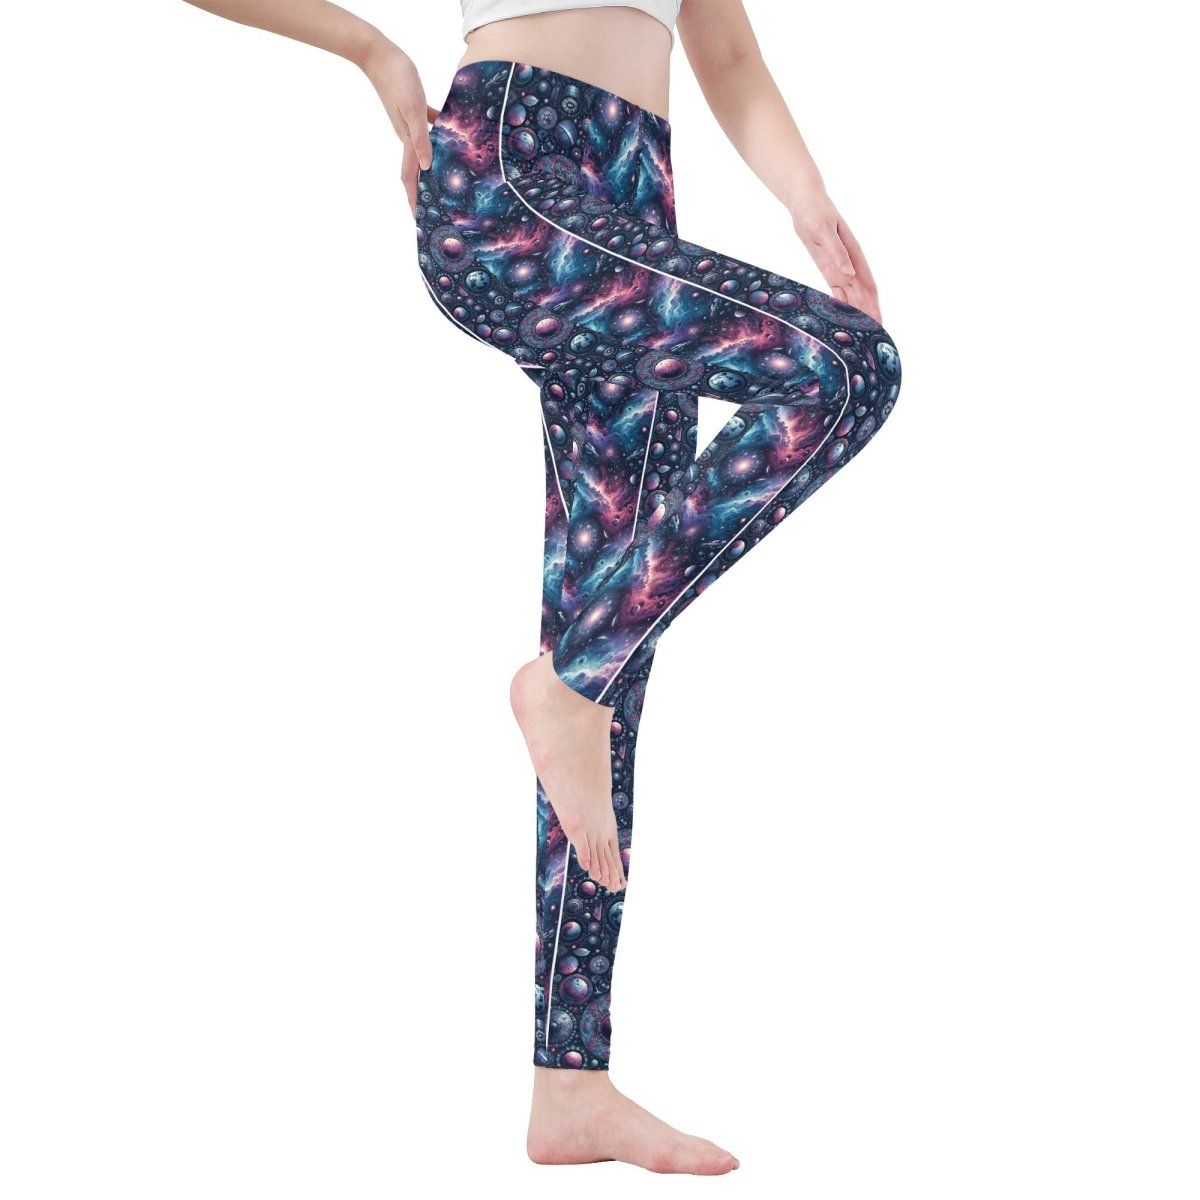 Sleek Yoga Leggings for Women - Comfortable and Stylish Planets Print Pants - Iron Phoenix GHG